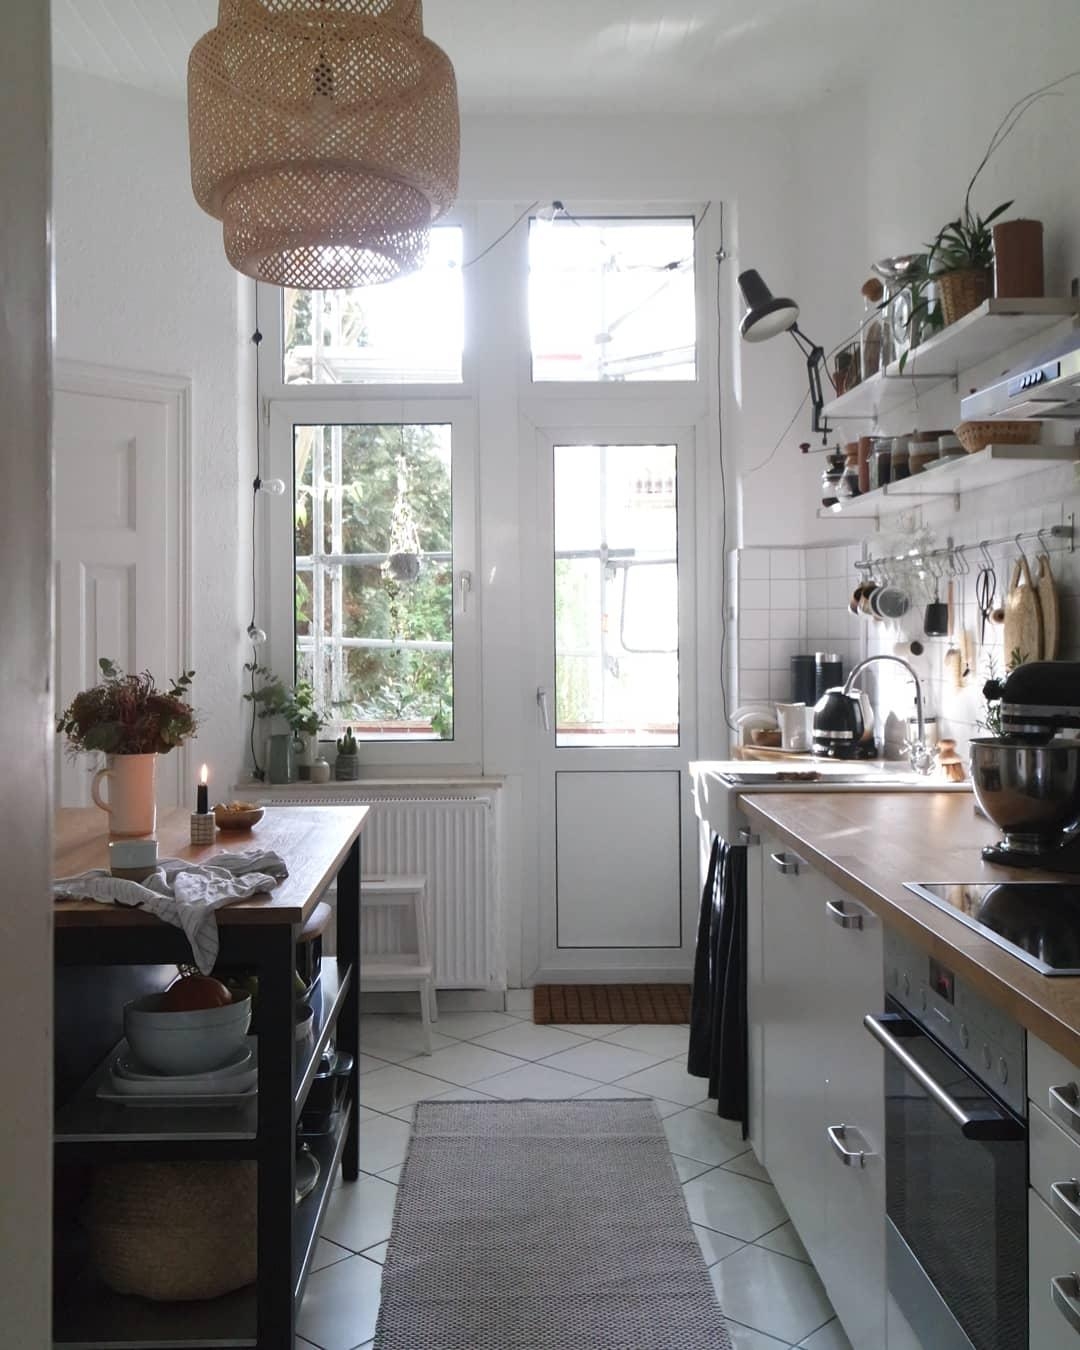 #Kitchenview = #favouriteview 

#altbau #altbauliebe #küche 